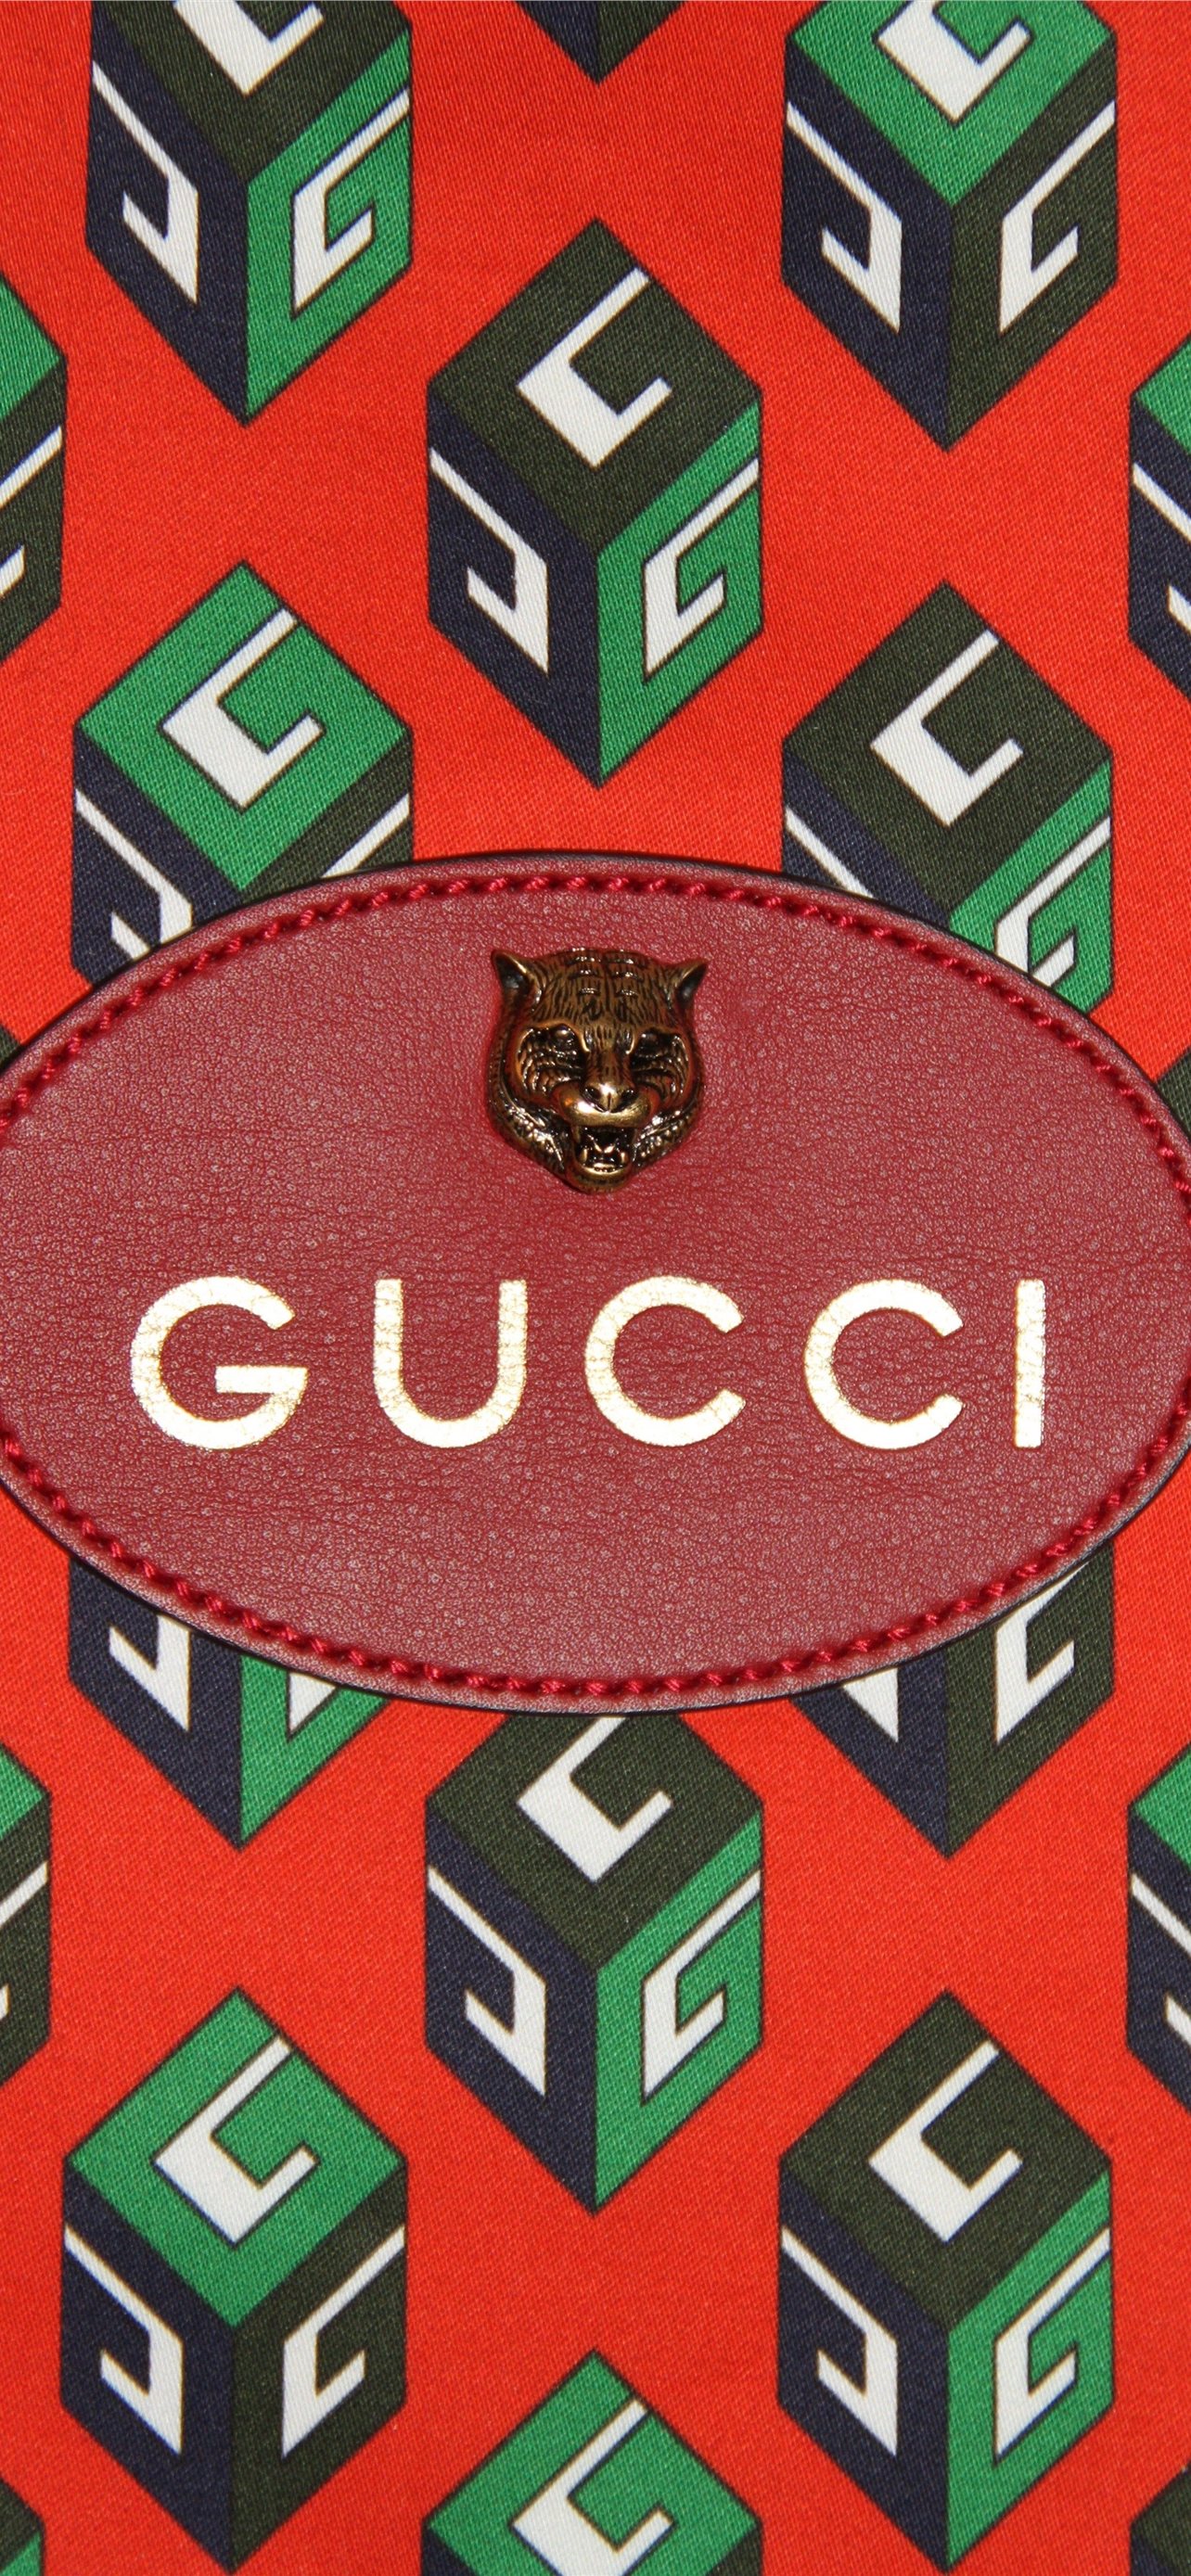 byrde Gammel mand maske Gucci Backpack Cave iPhone Wallpapers Free Download